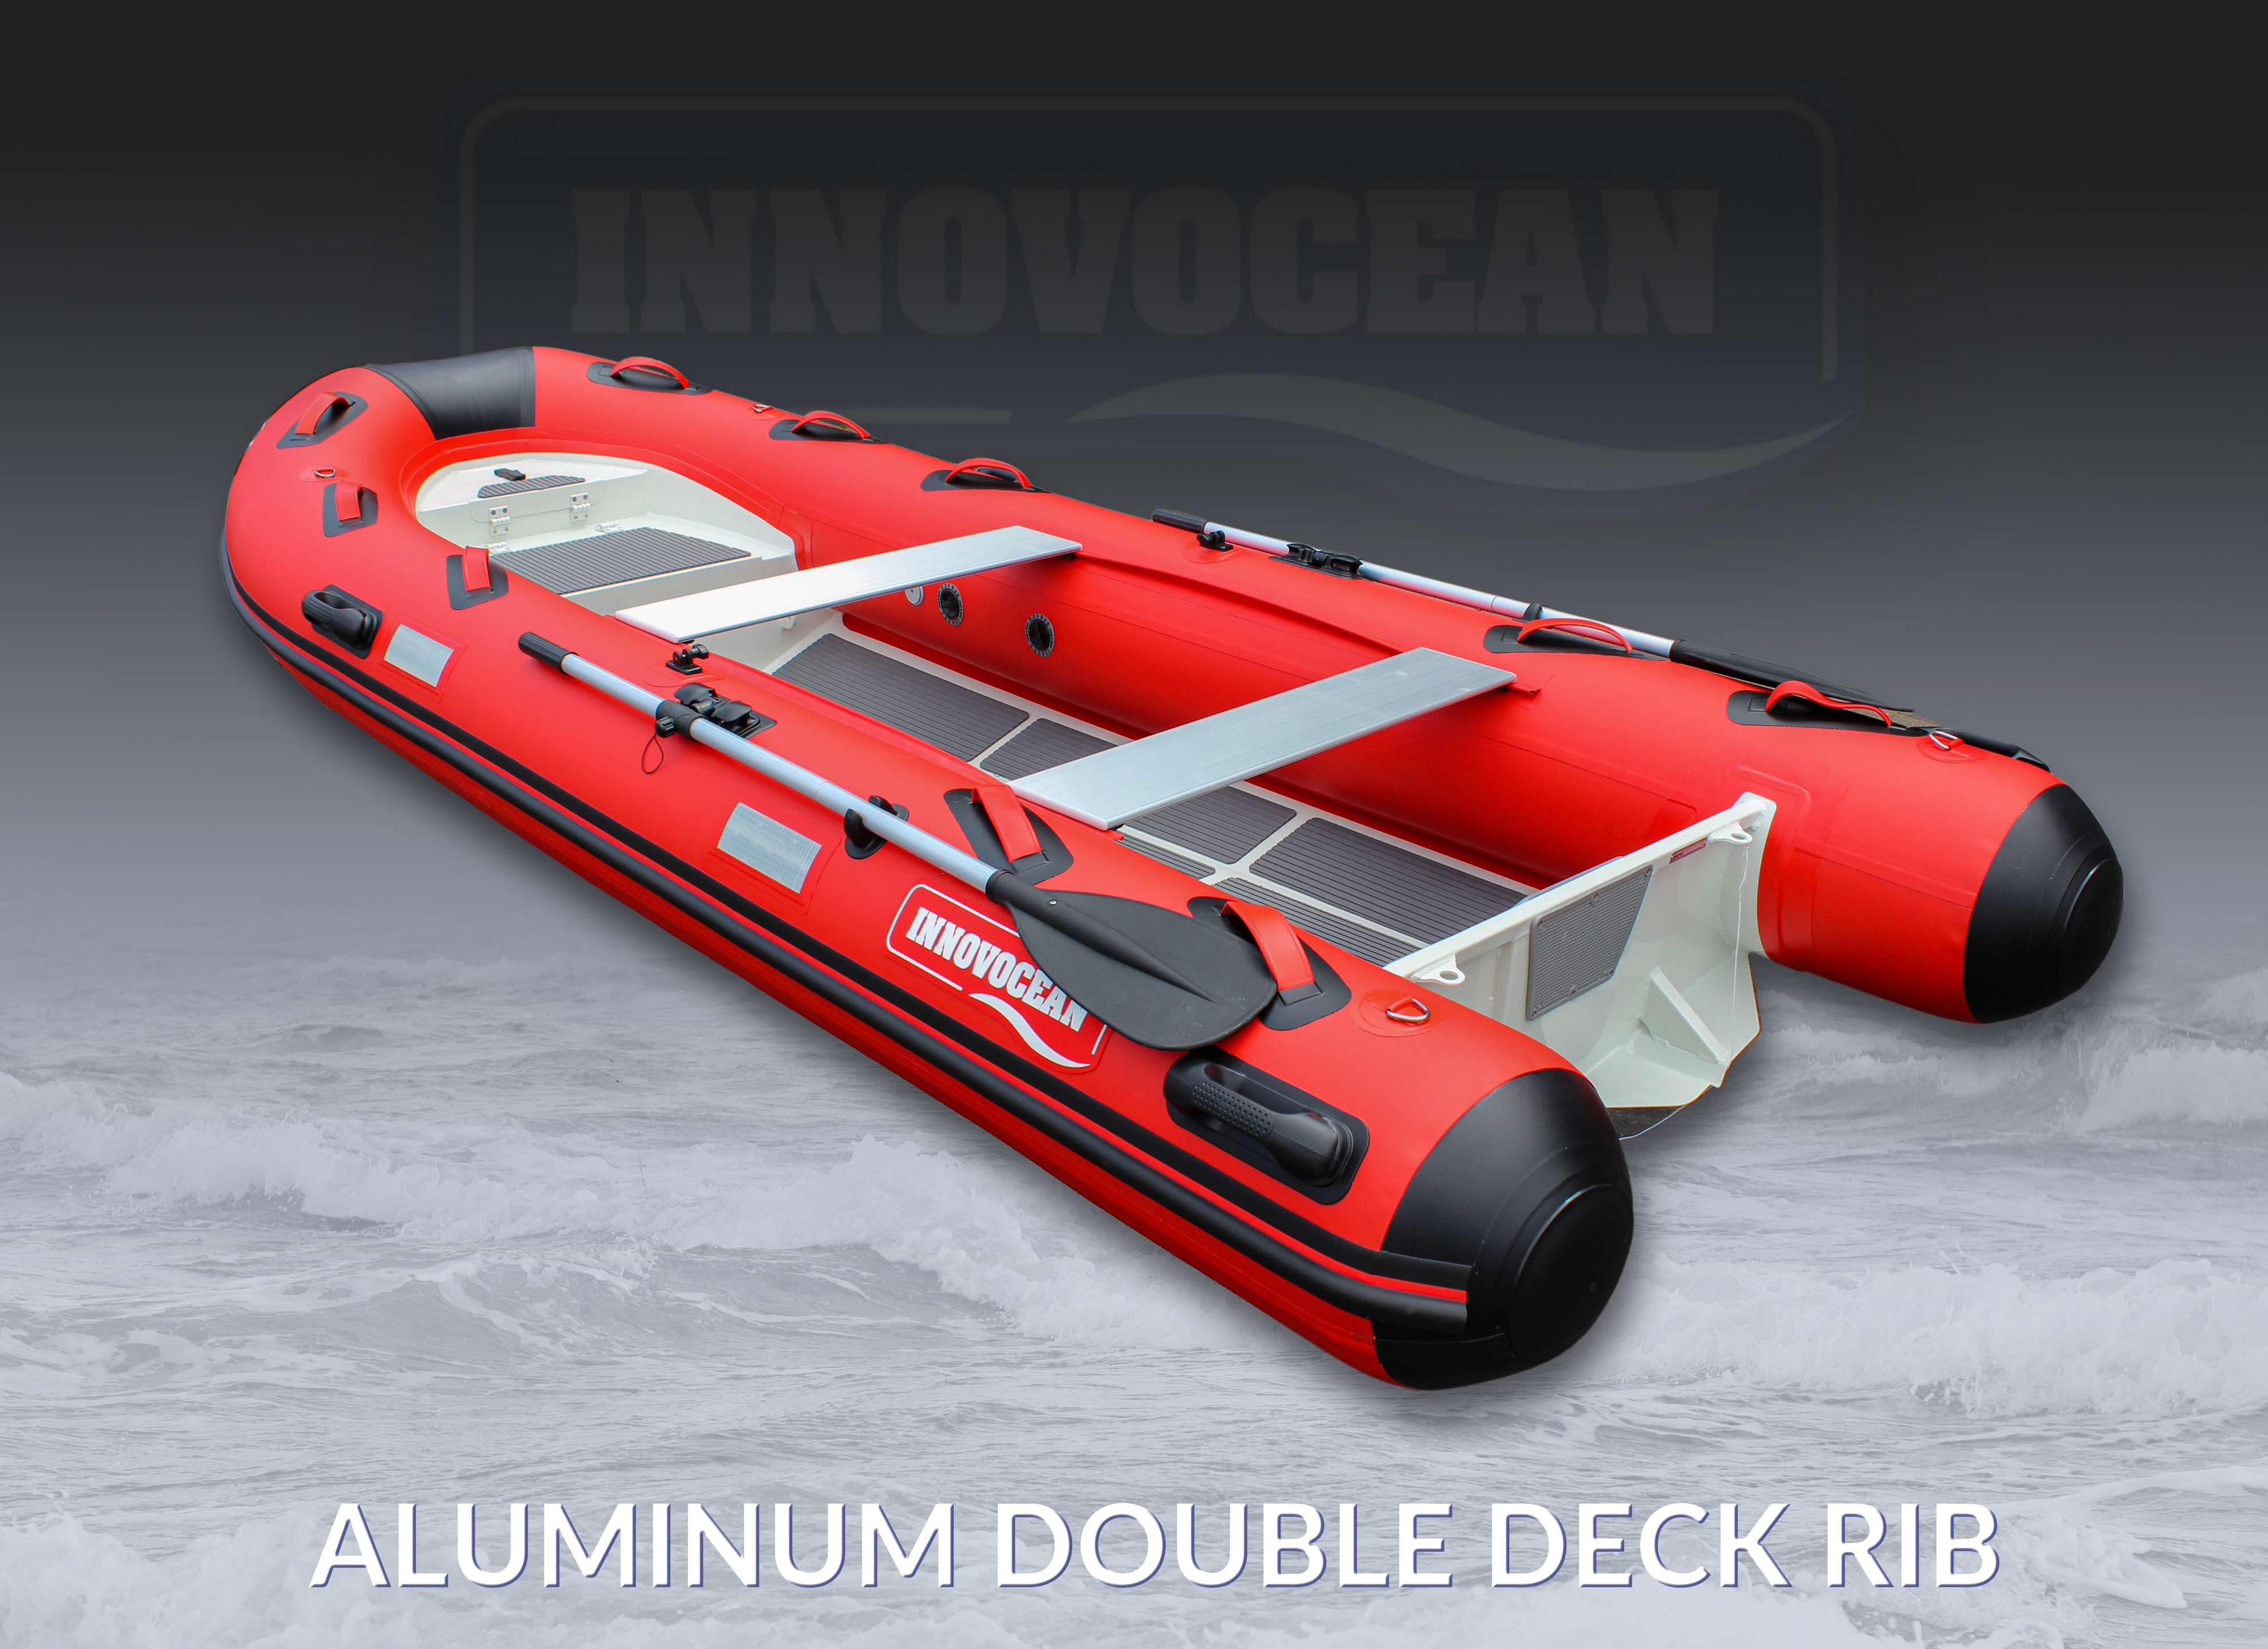 Aluminum Double Deck RIB